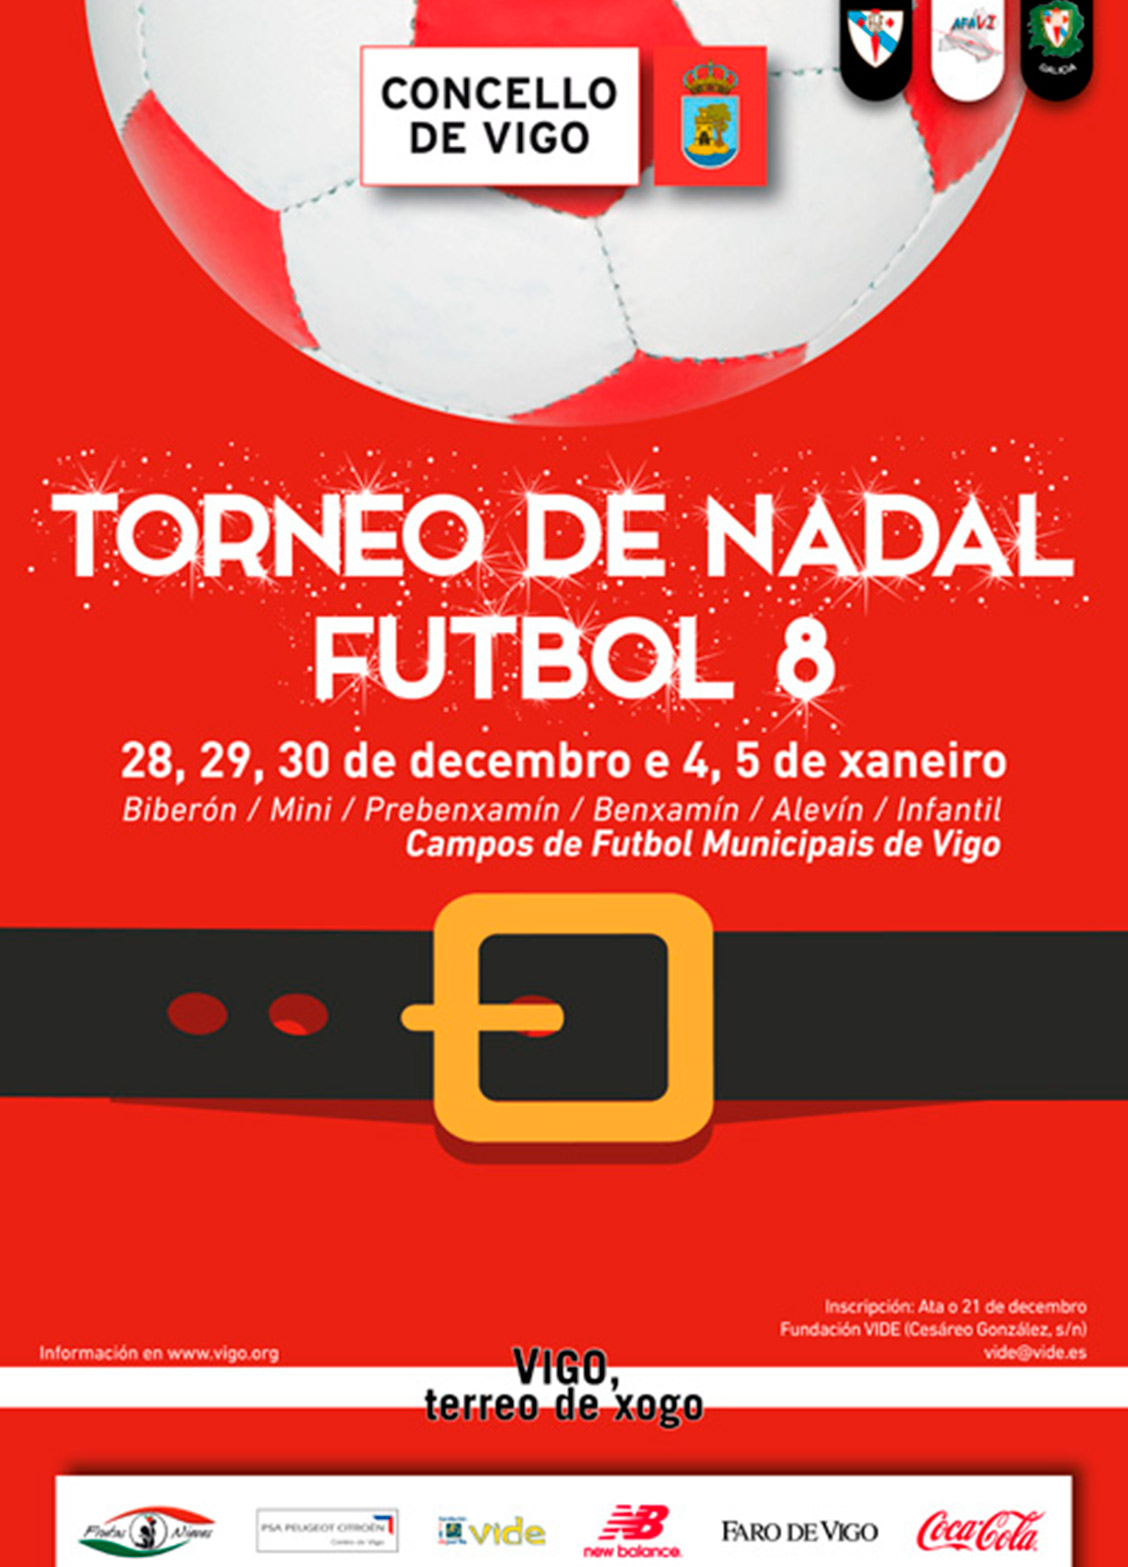 TORNEO DE NADAL FUTBOL 8 2015